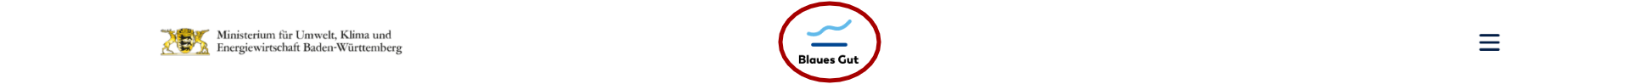 Blaues Gut Logo im Menü